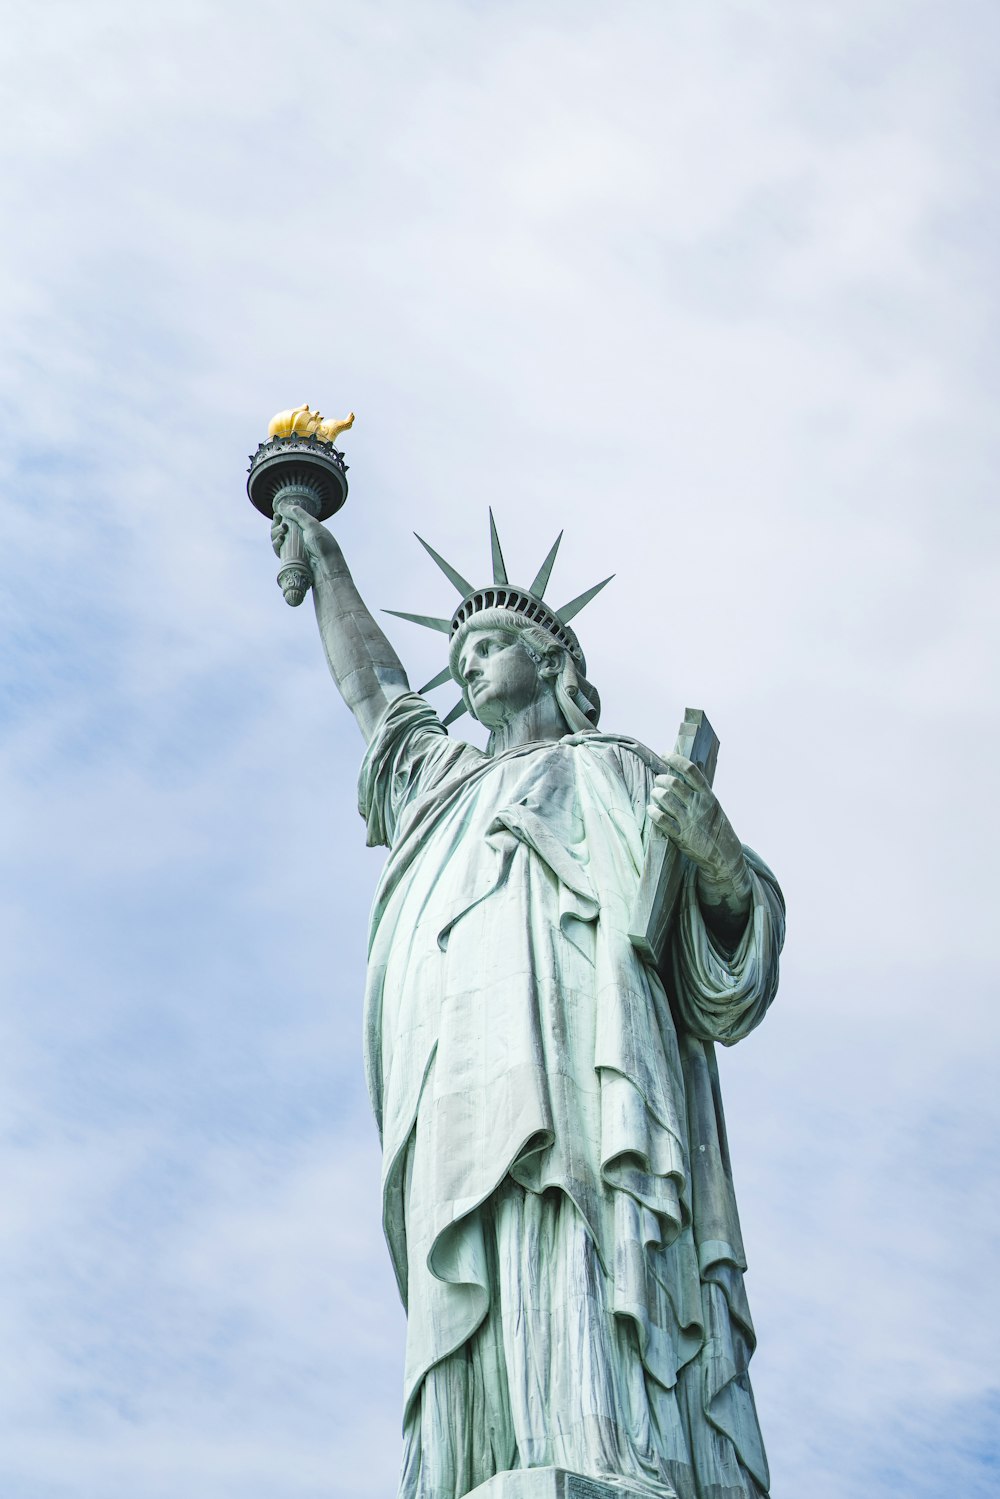 foto de foco raso da Estátua da Liberdade